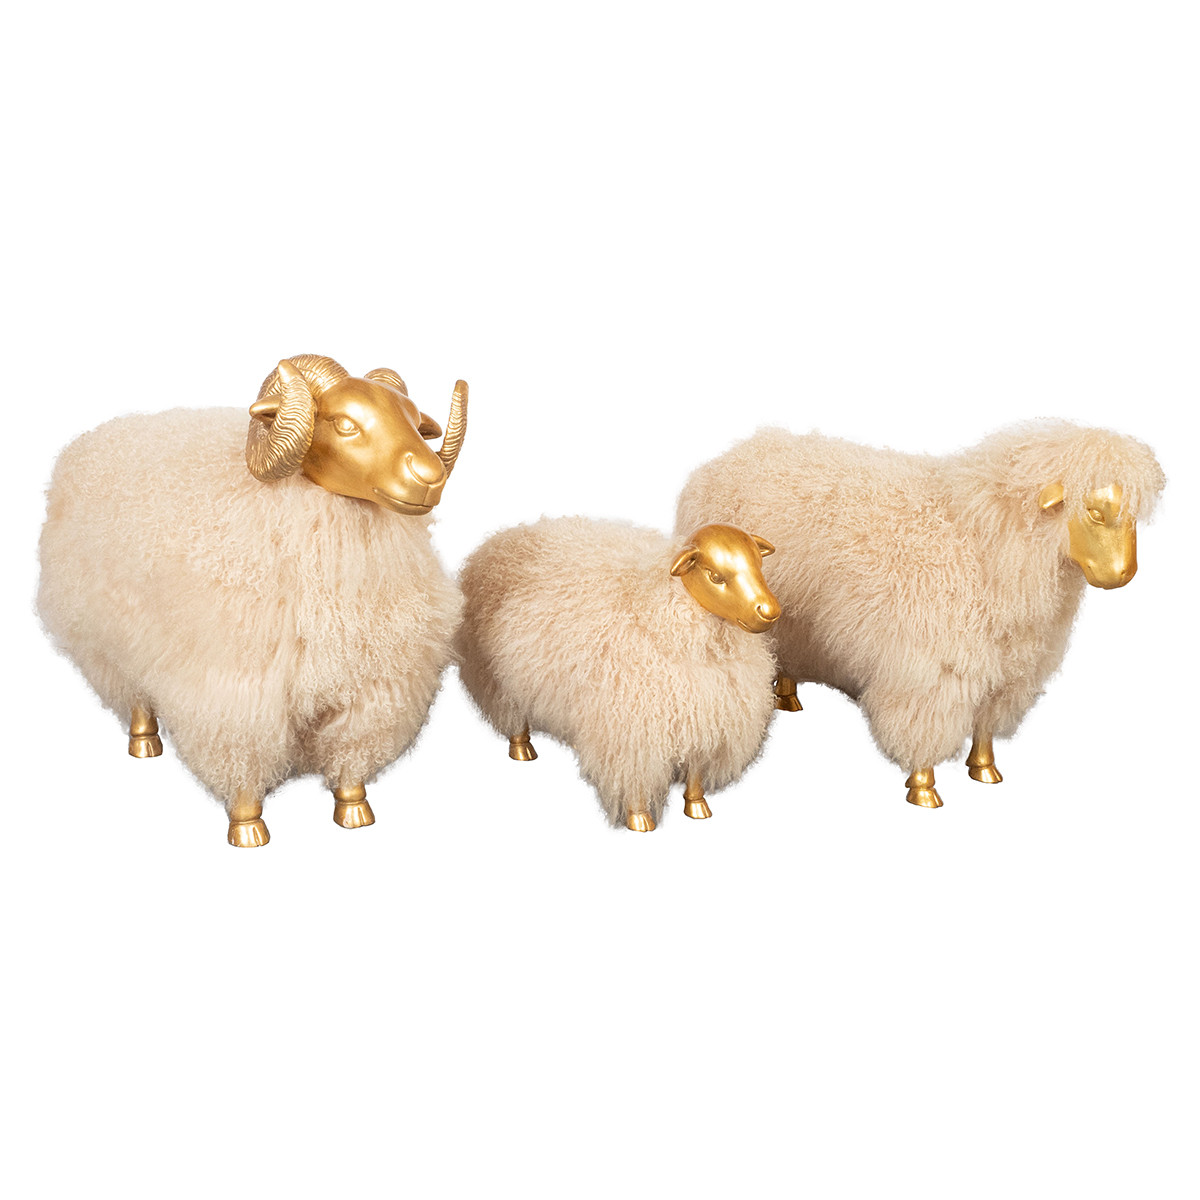 Giltwood sheep family by Carlos Villegas